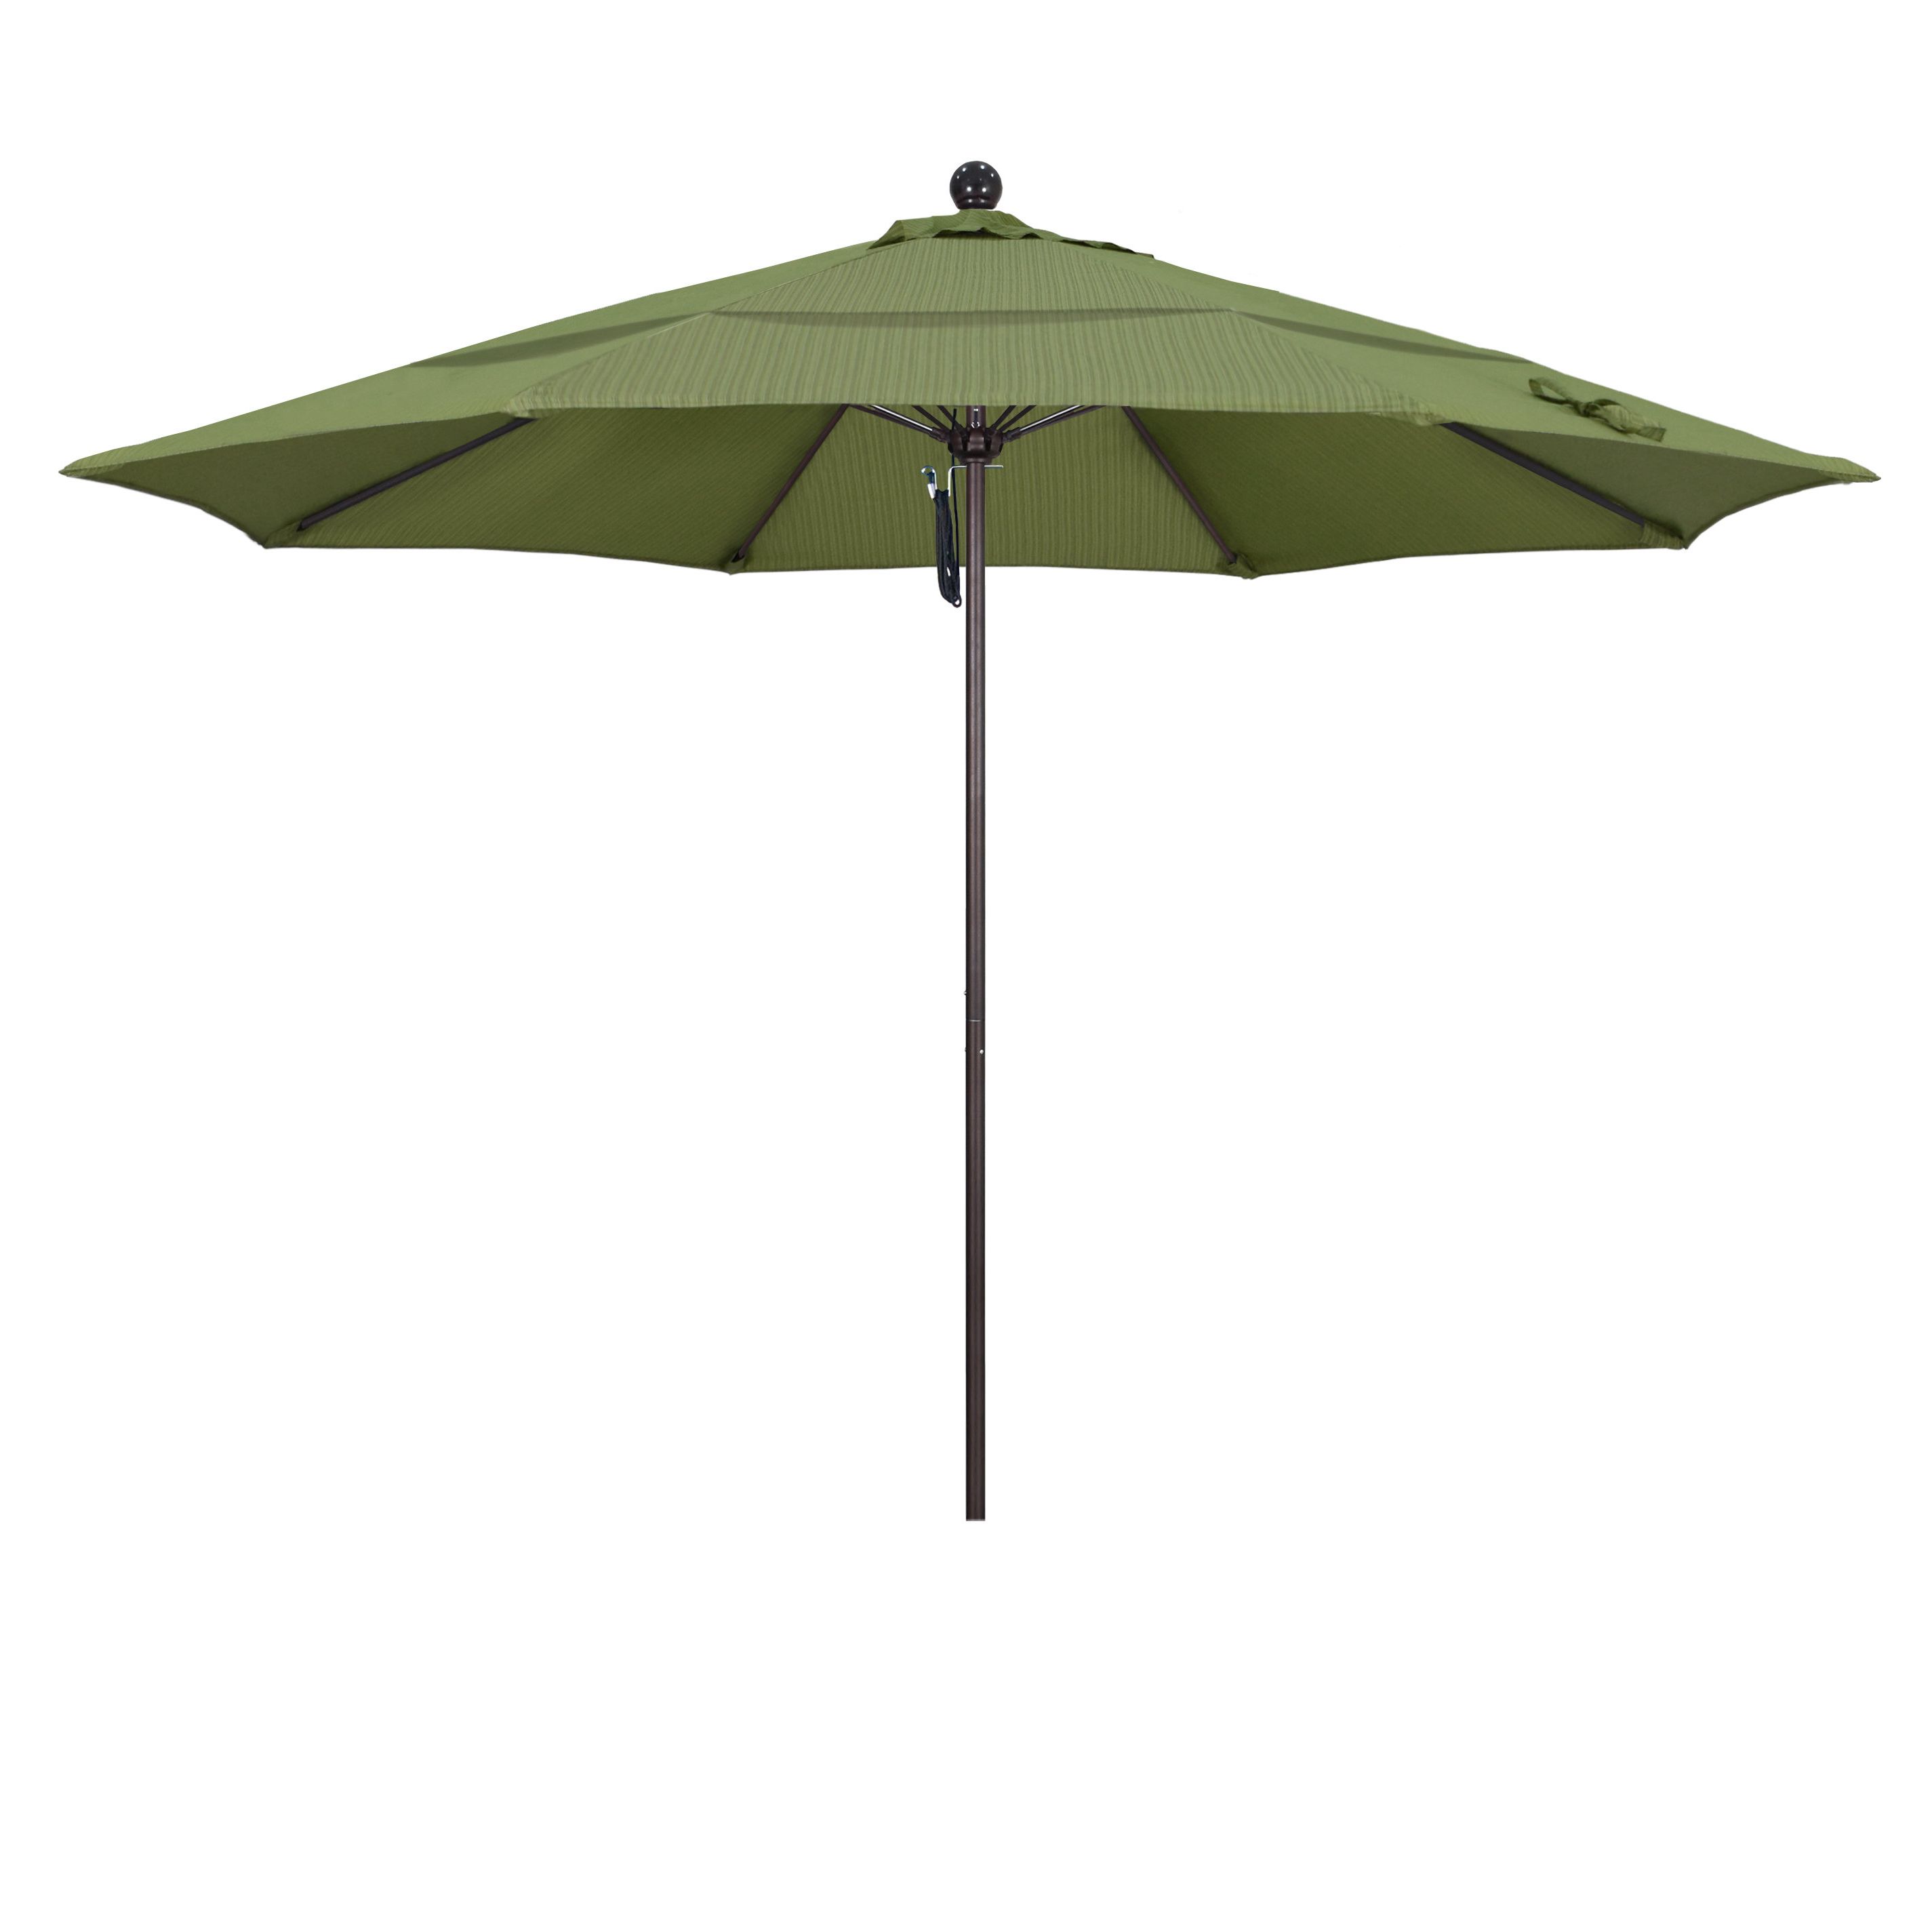 Preferred Benson 11' Market Umbrella Regarding Mucci Madilyn Market Sunbrella Umbrellas (View 5 of 20)